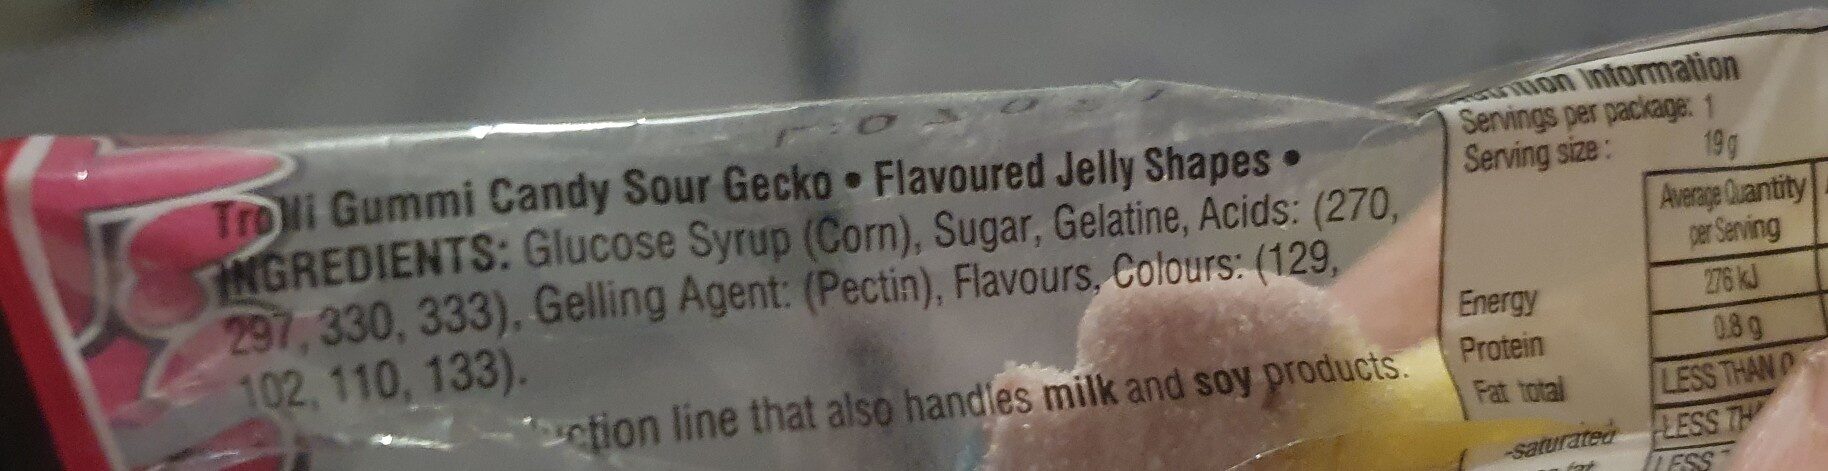 Sour gecko - Ingredients